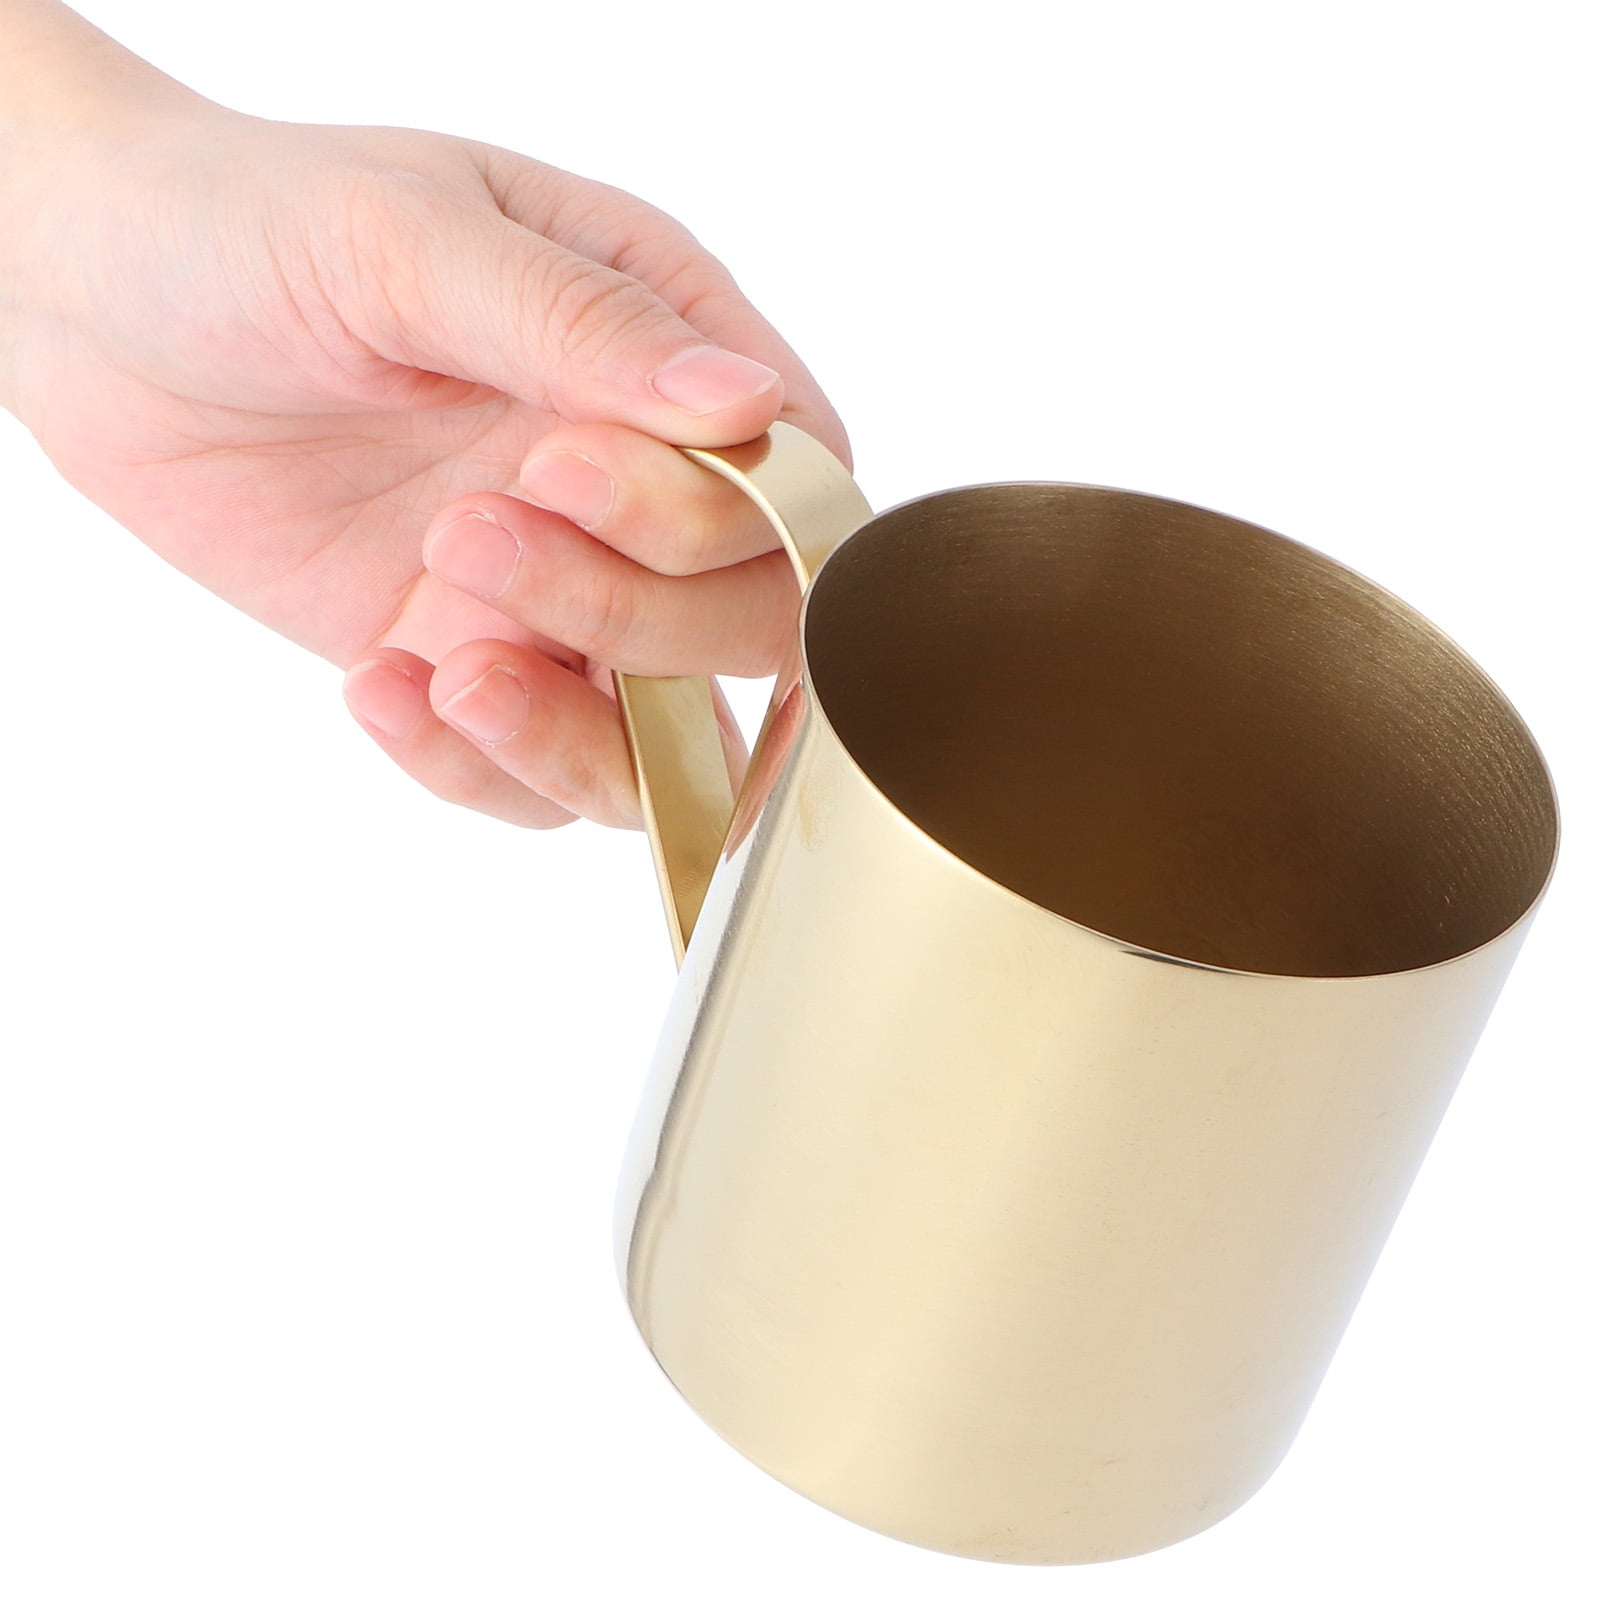 CnGlass Cappuccino Glass Mugs 8.1oz,Clear Coffee Mug Set of 2 Espresso Mug  Cups,Double Wall Insulated Glass Mug with Handle for Latte,Cappuccino,Tea 